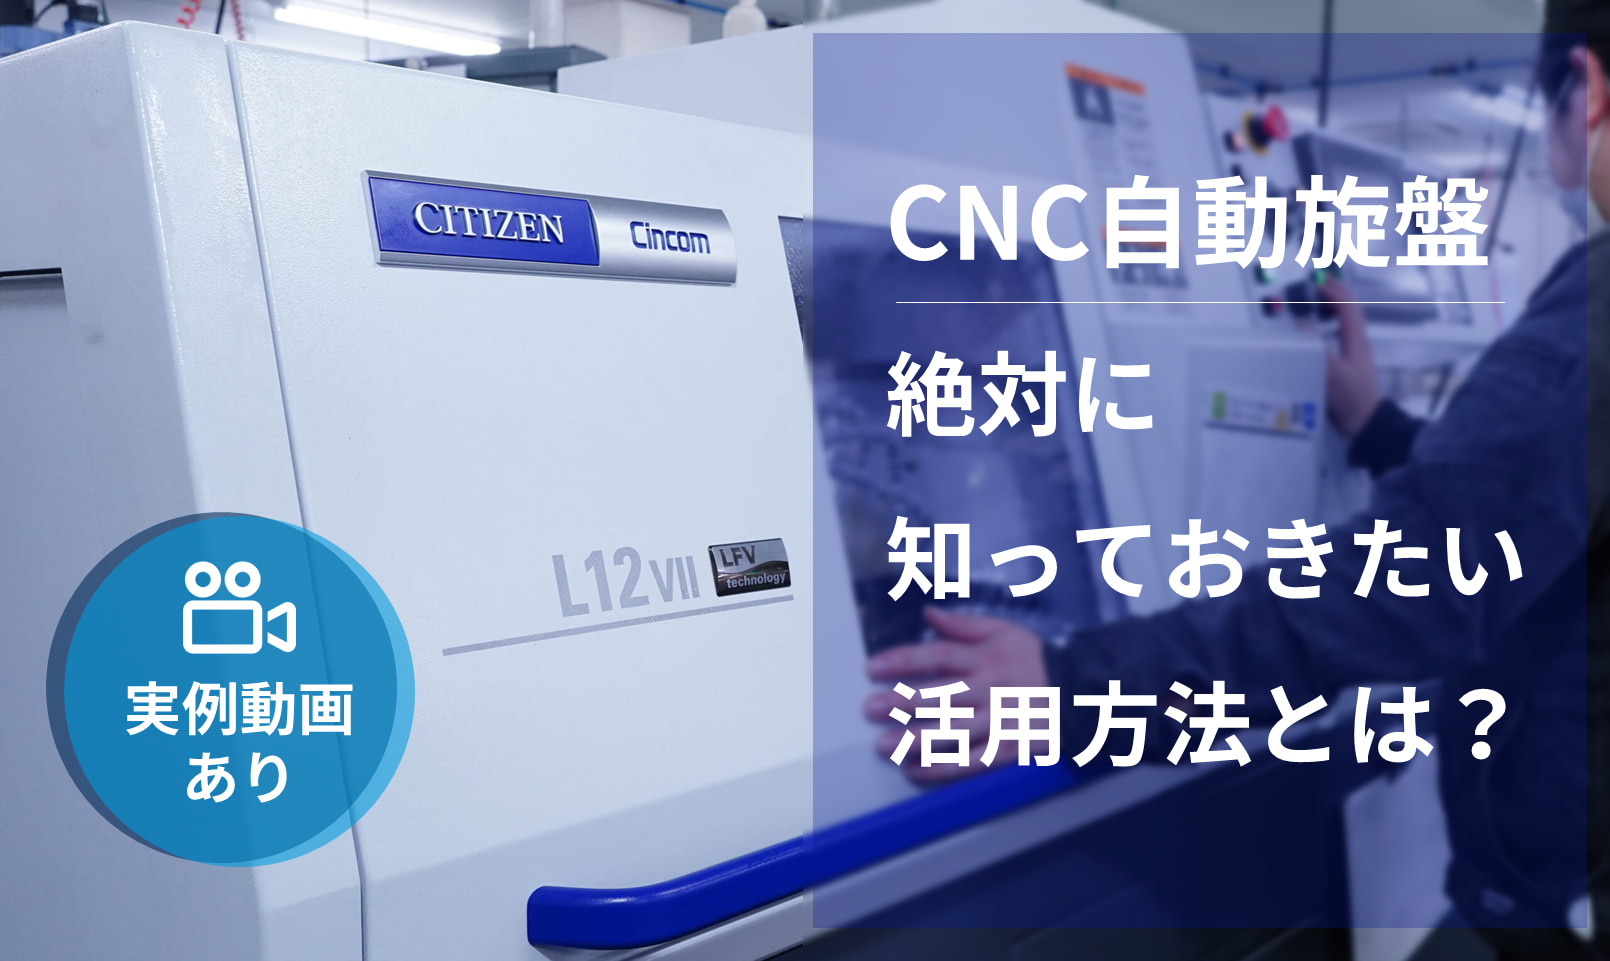 CNC自動旋盤、絶対に知っておきたい活用方法とは?